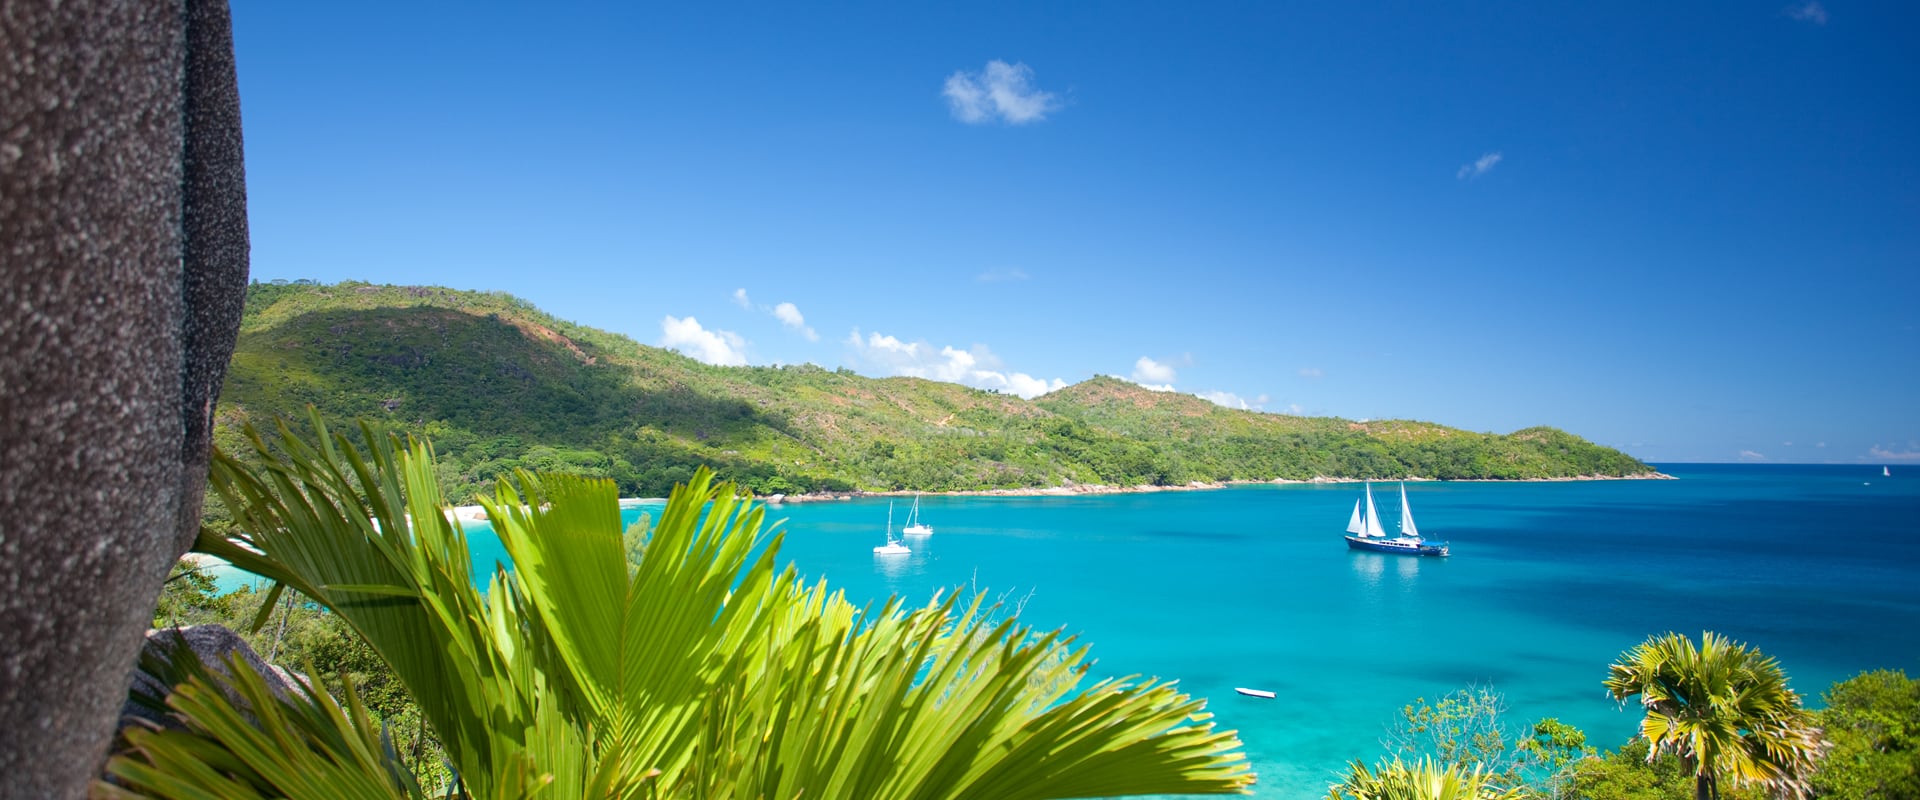 7 Cruises in Seychelles - LiveAboard.com